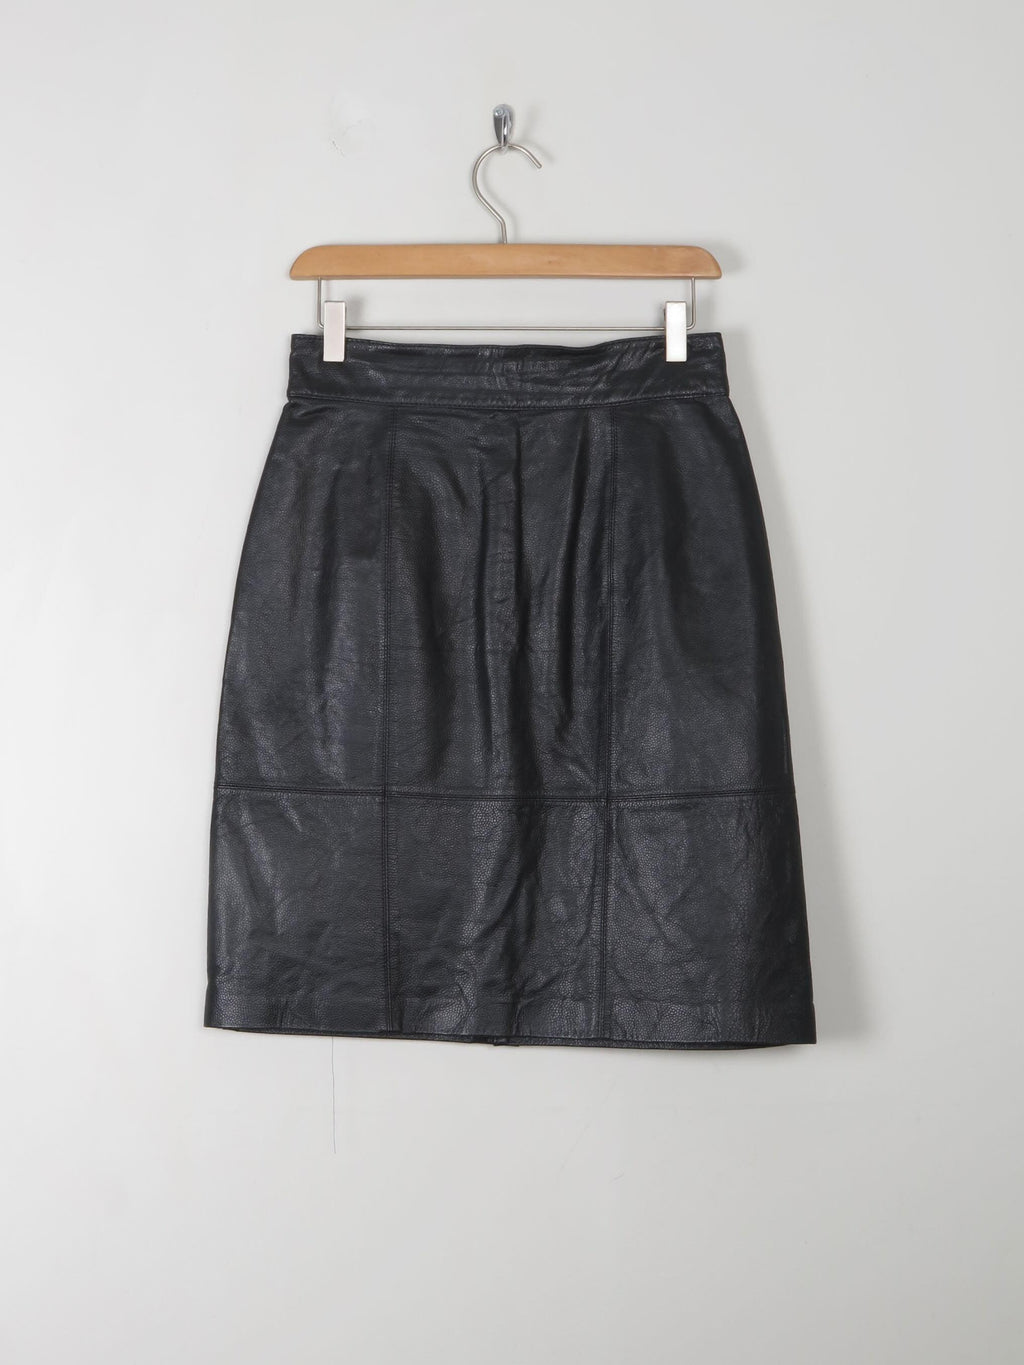 Vintage Black Leather Skirt 27'W - The Harlequin